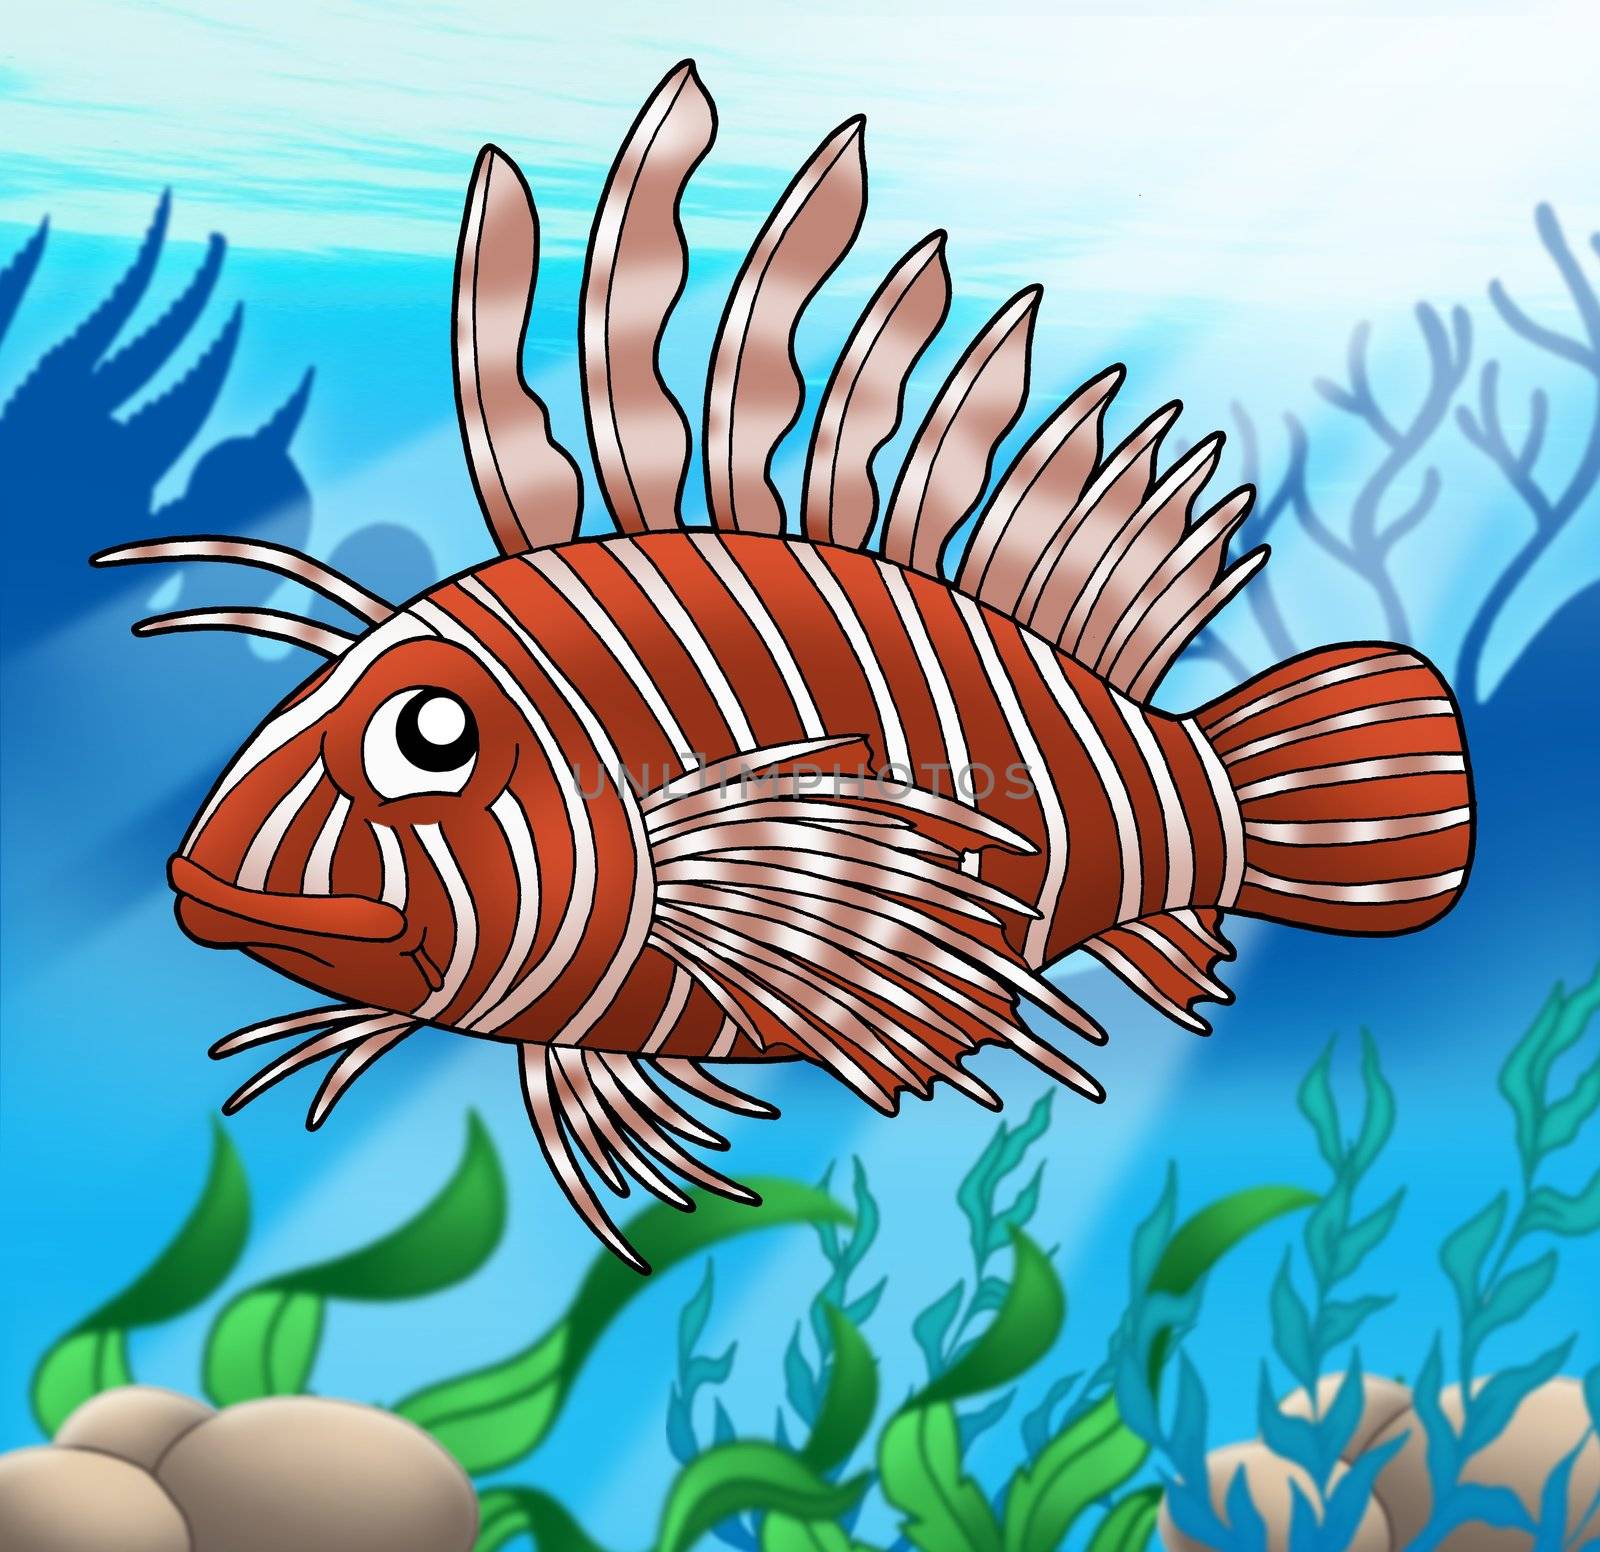 Lion fish in sea - color illustration.